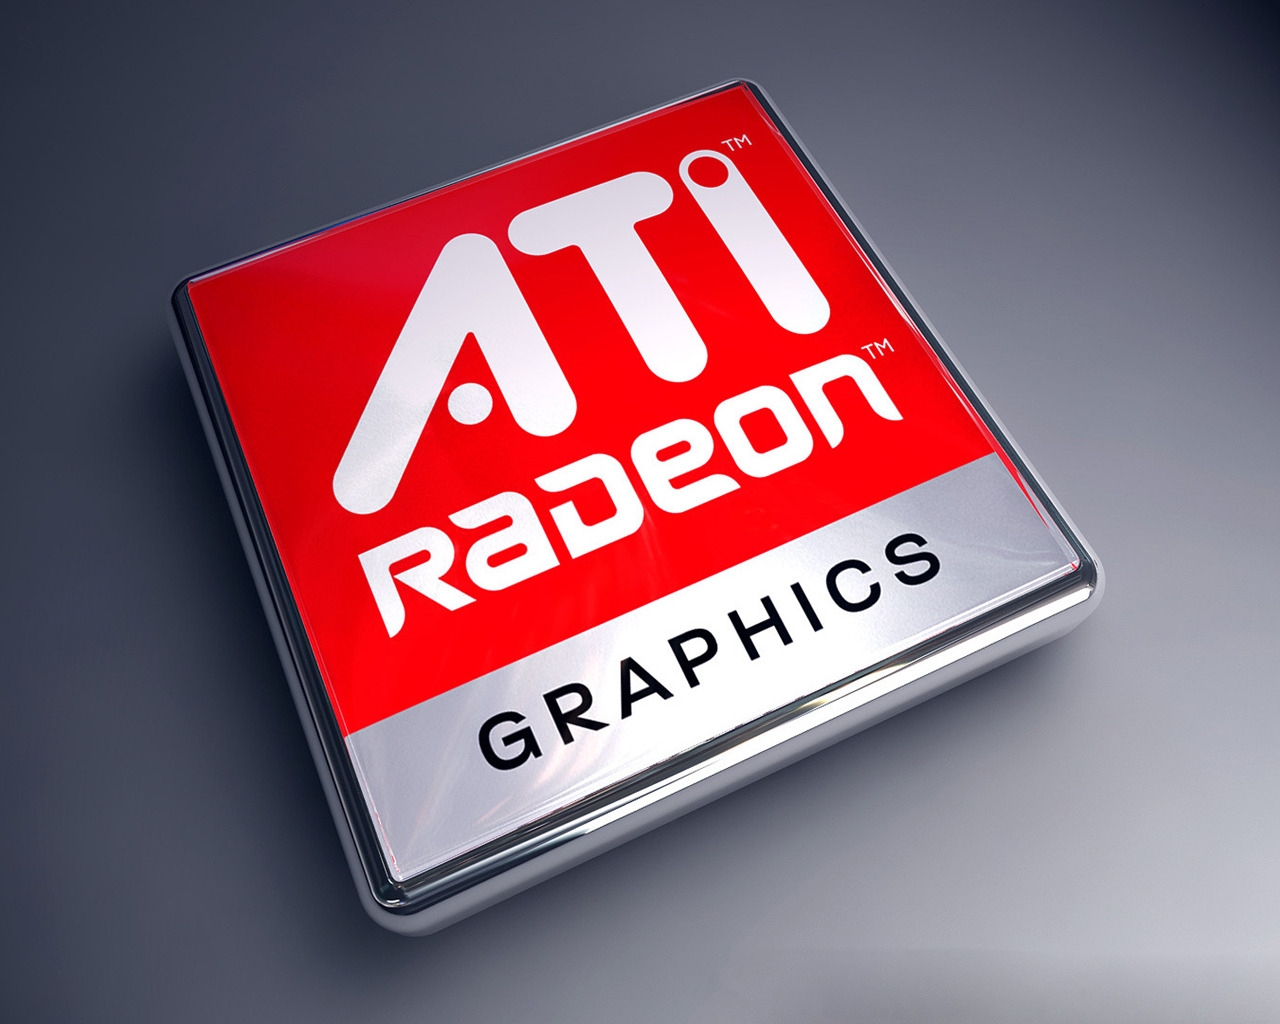 ATI Radeon Graphics for 1280 x 1024 resolution